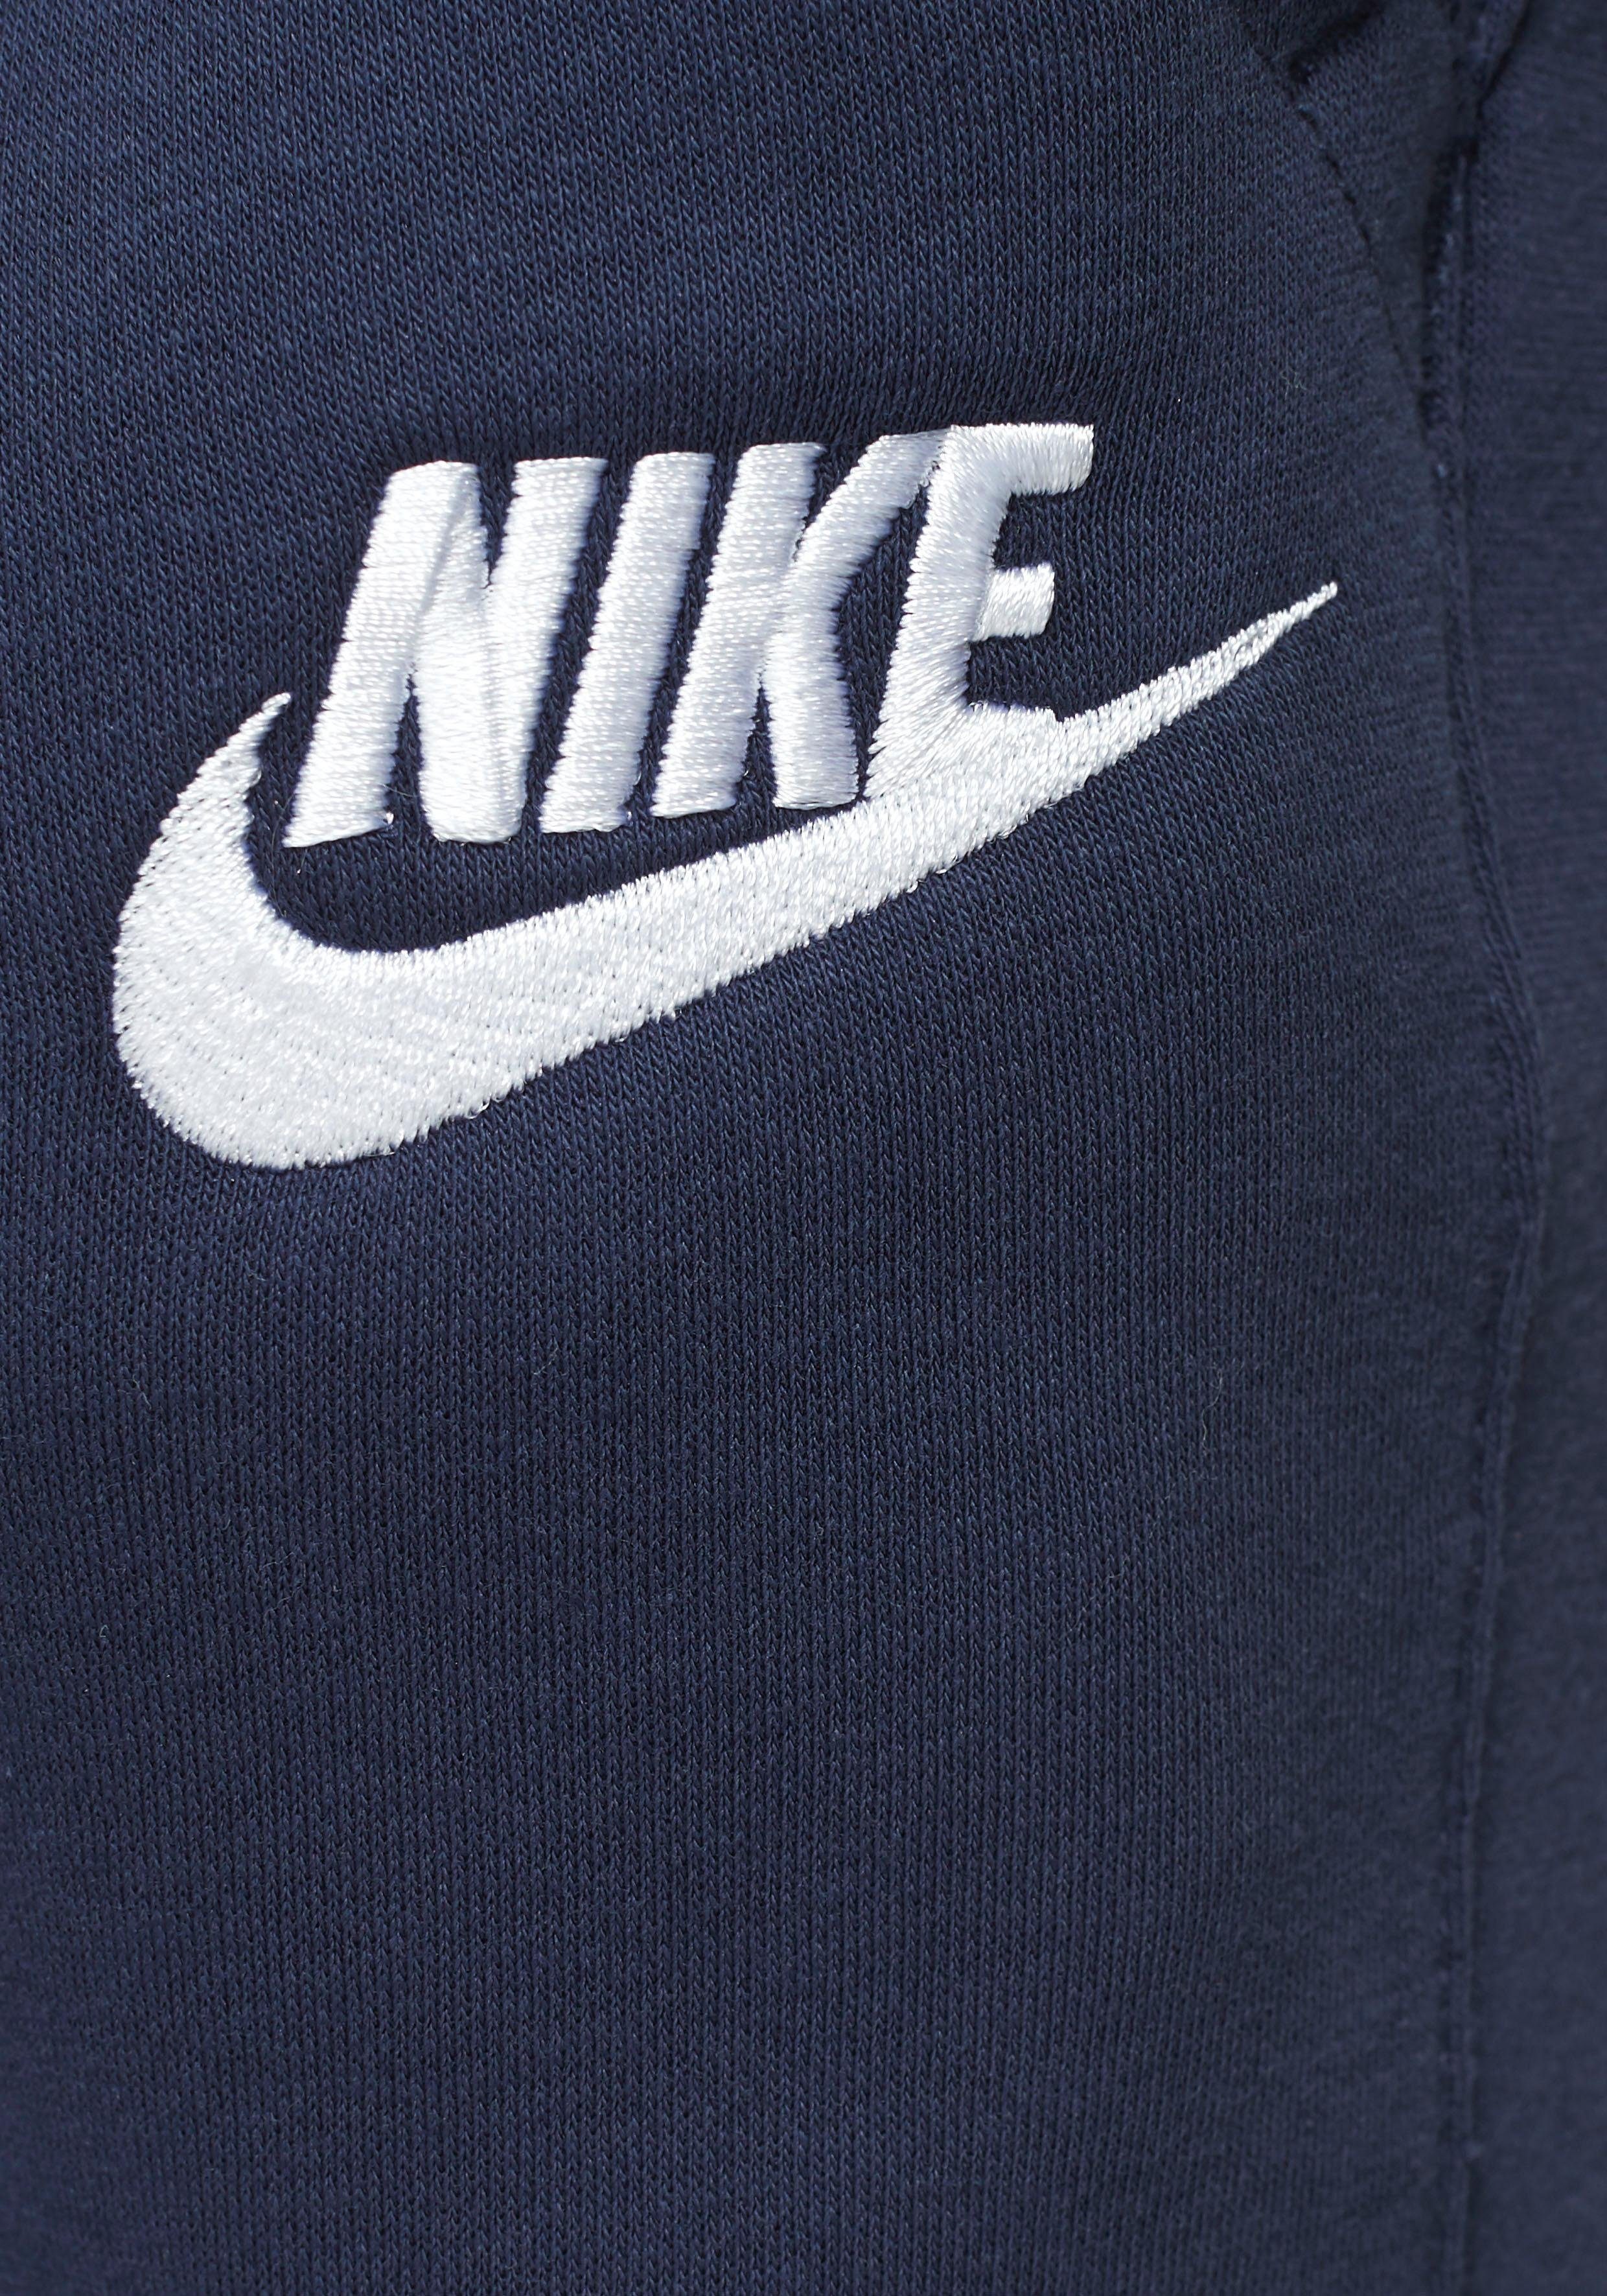 Nike Sportswear Jogginghose B NSW JOGGER dunkelblau CLUB PANT FLEECE